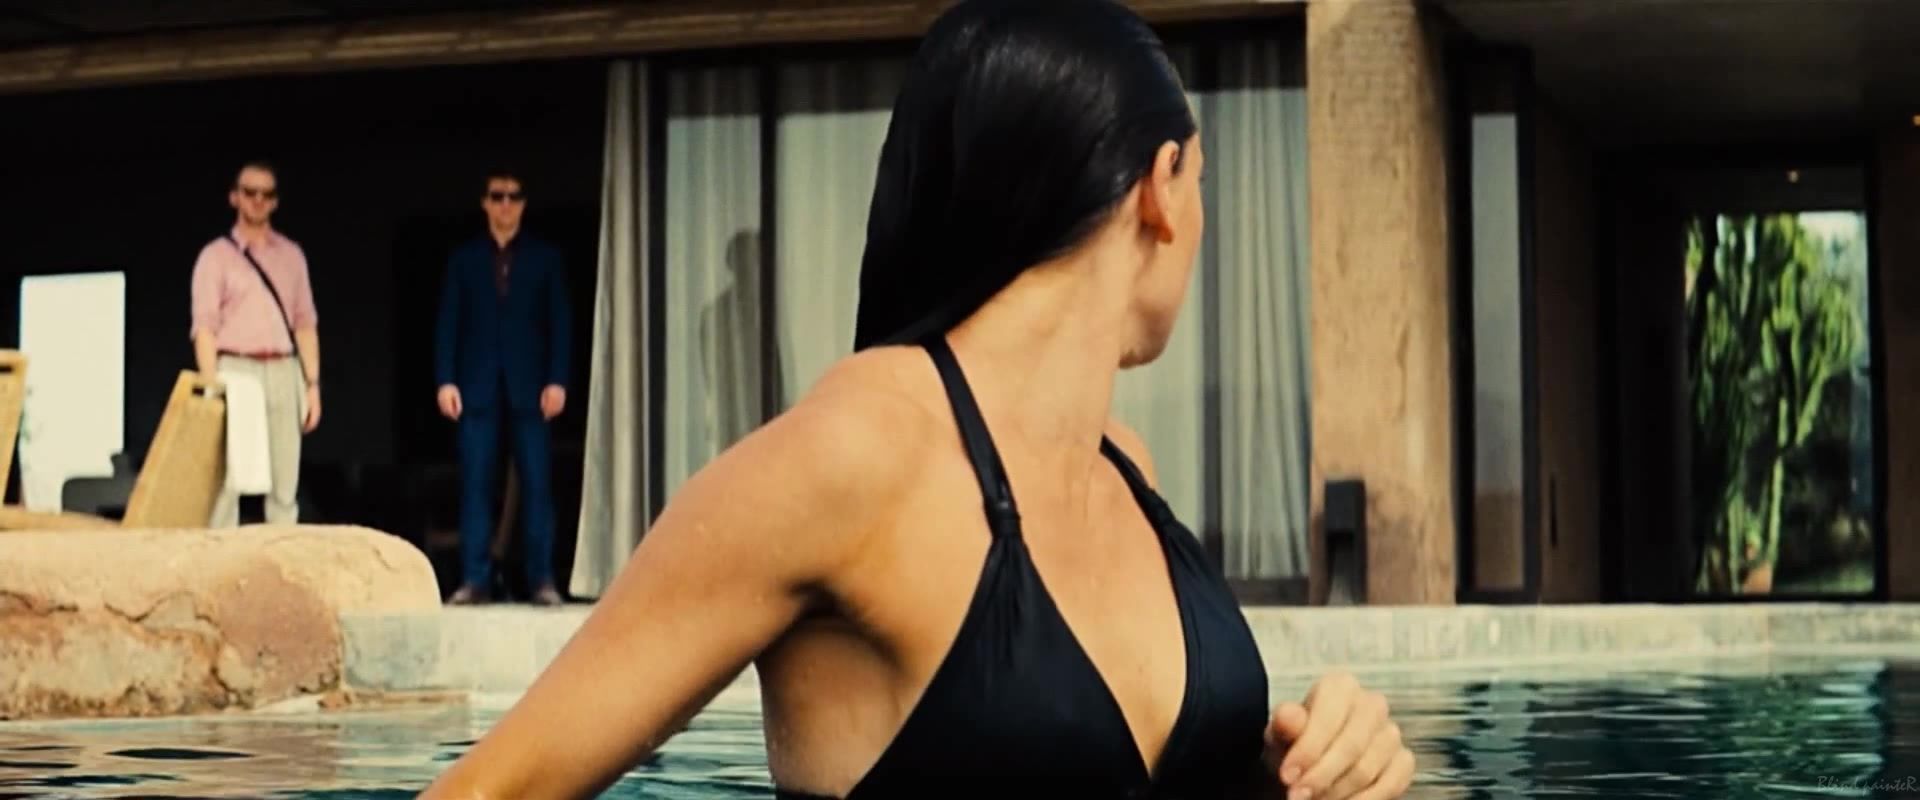 AsianPornHub Rebecca Ferguson nude - Mission Impossible Rogue Nation (2015) CamWhores